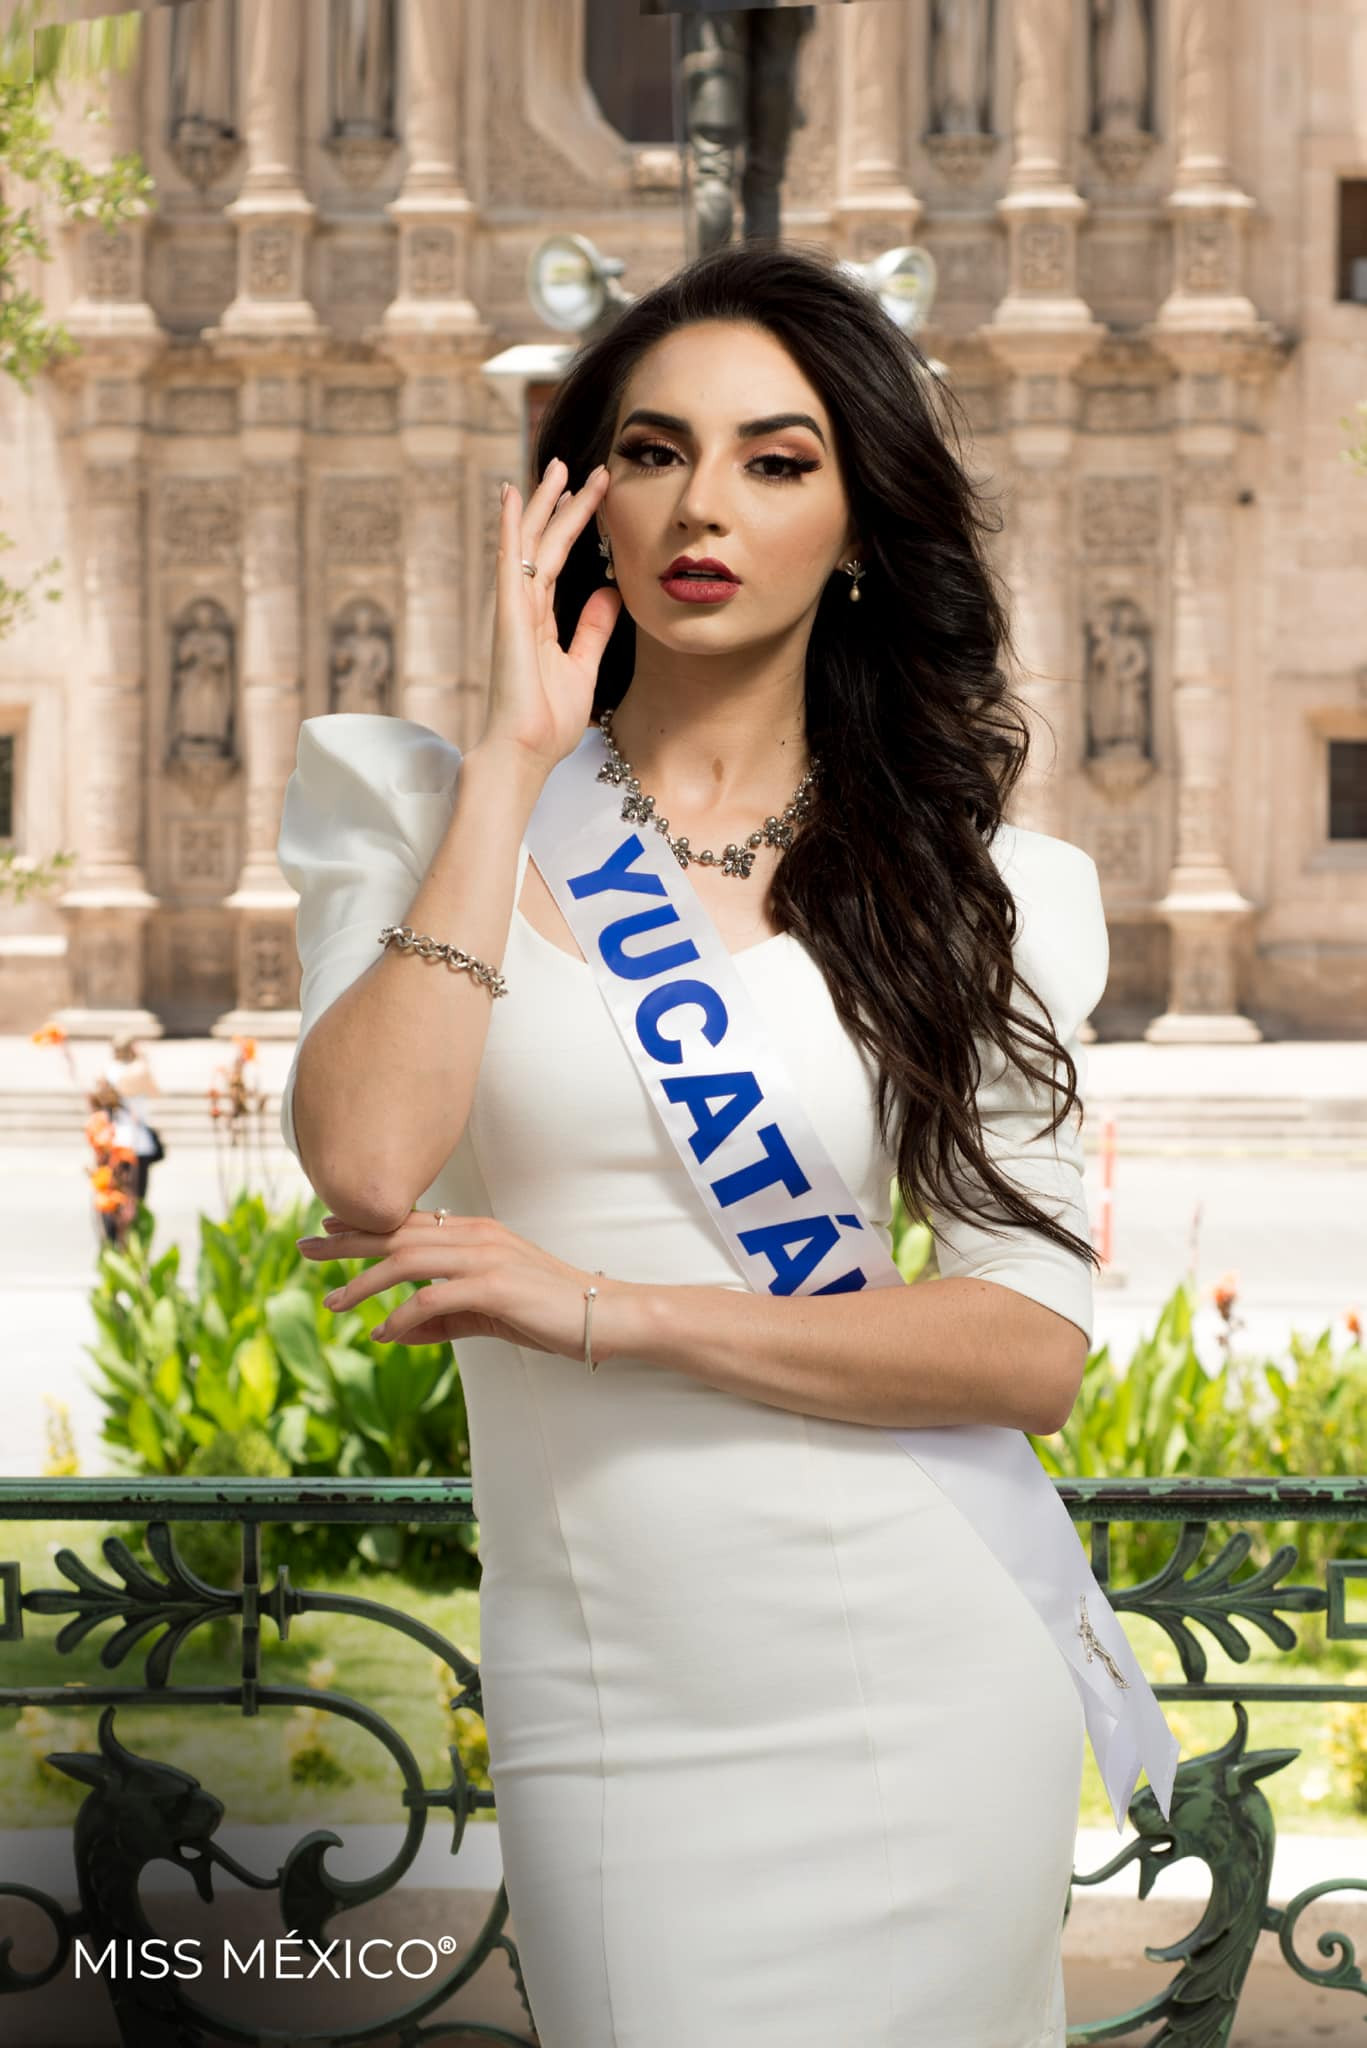 photo shoots de candidatas a miss mexico 2021. - Página 5 OFkFBj